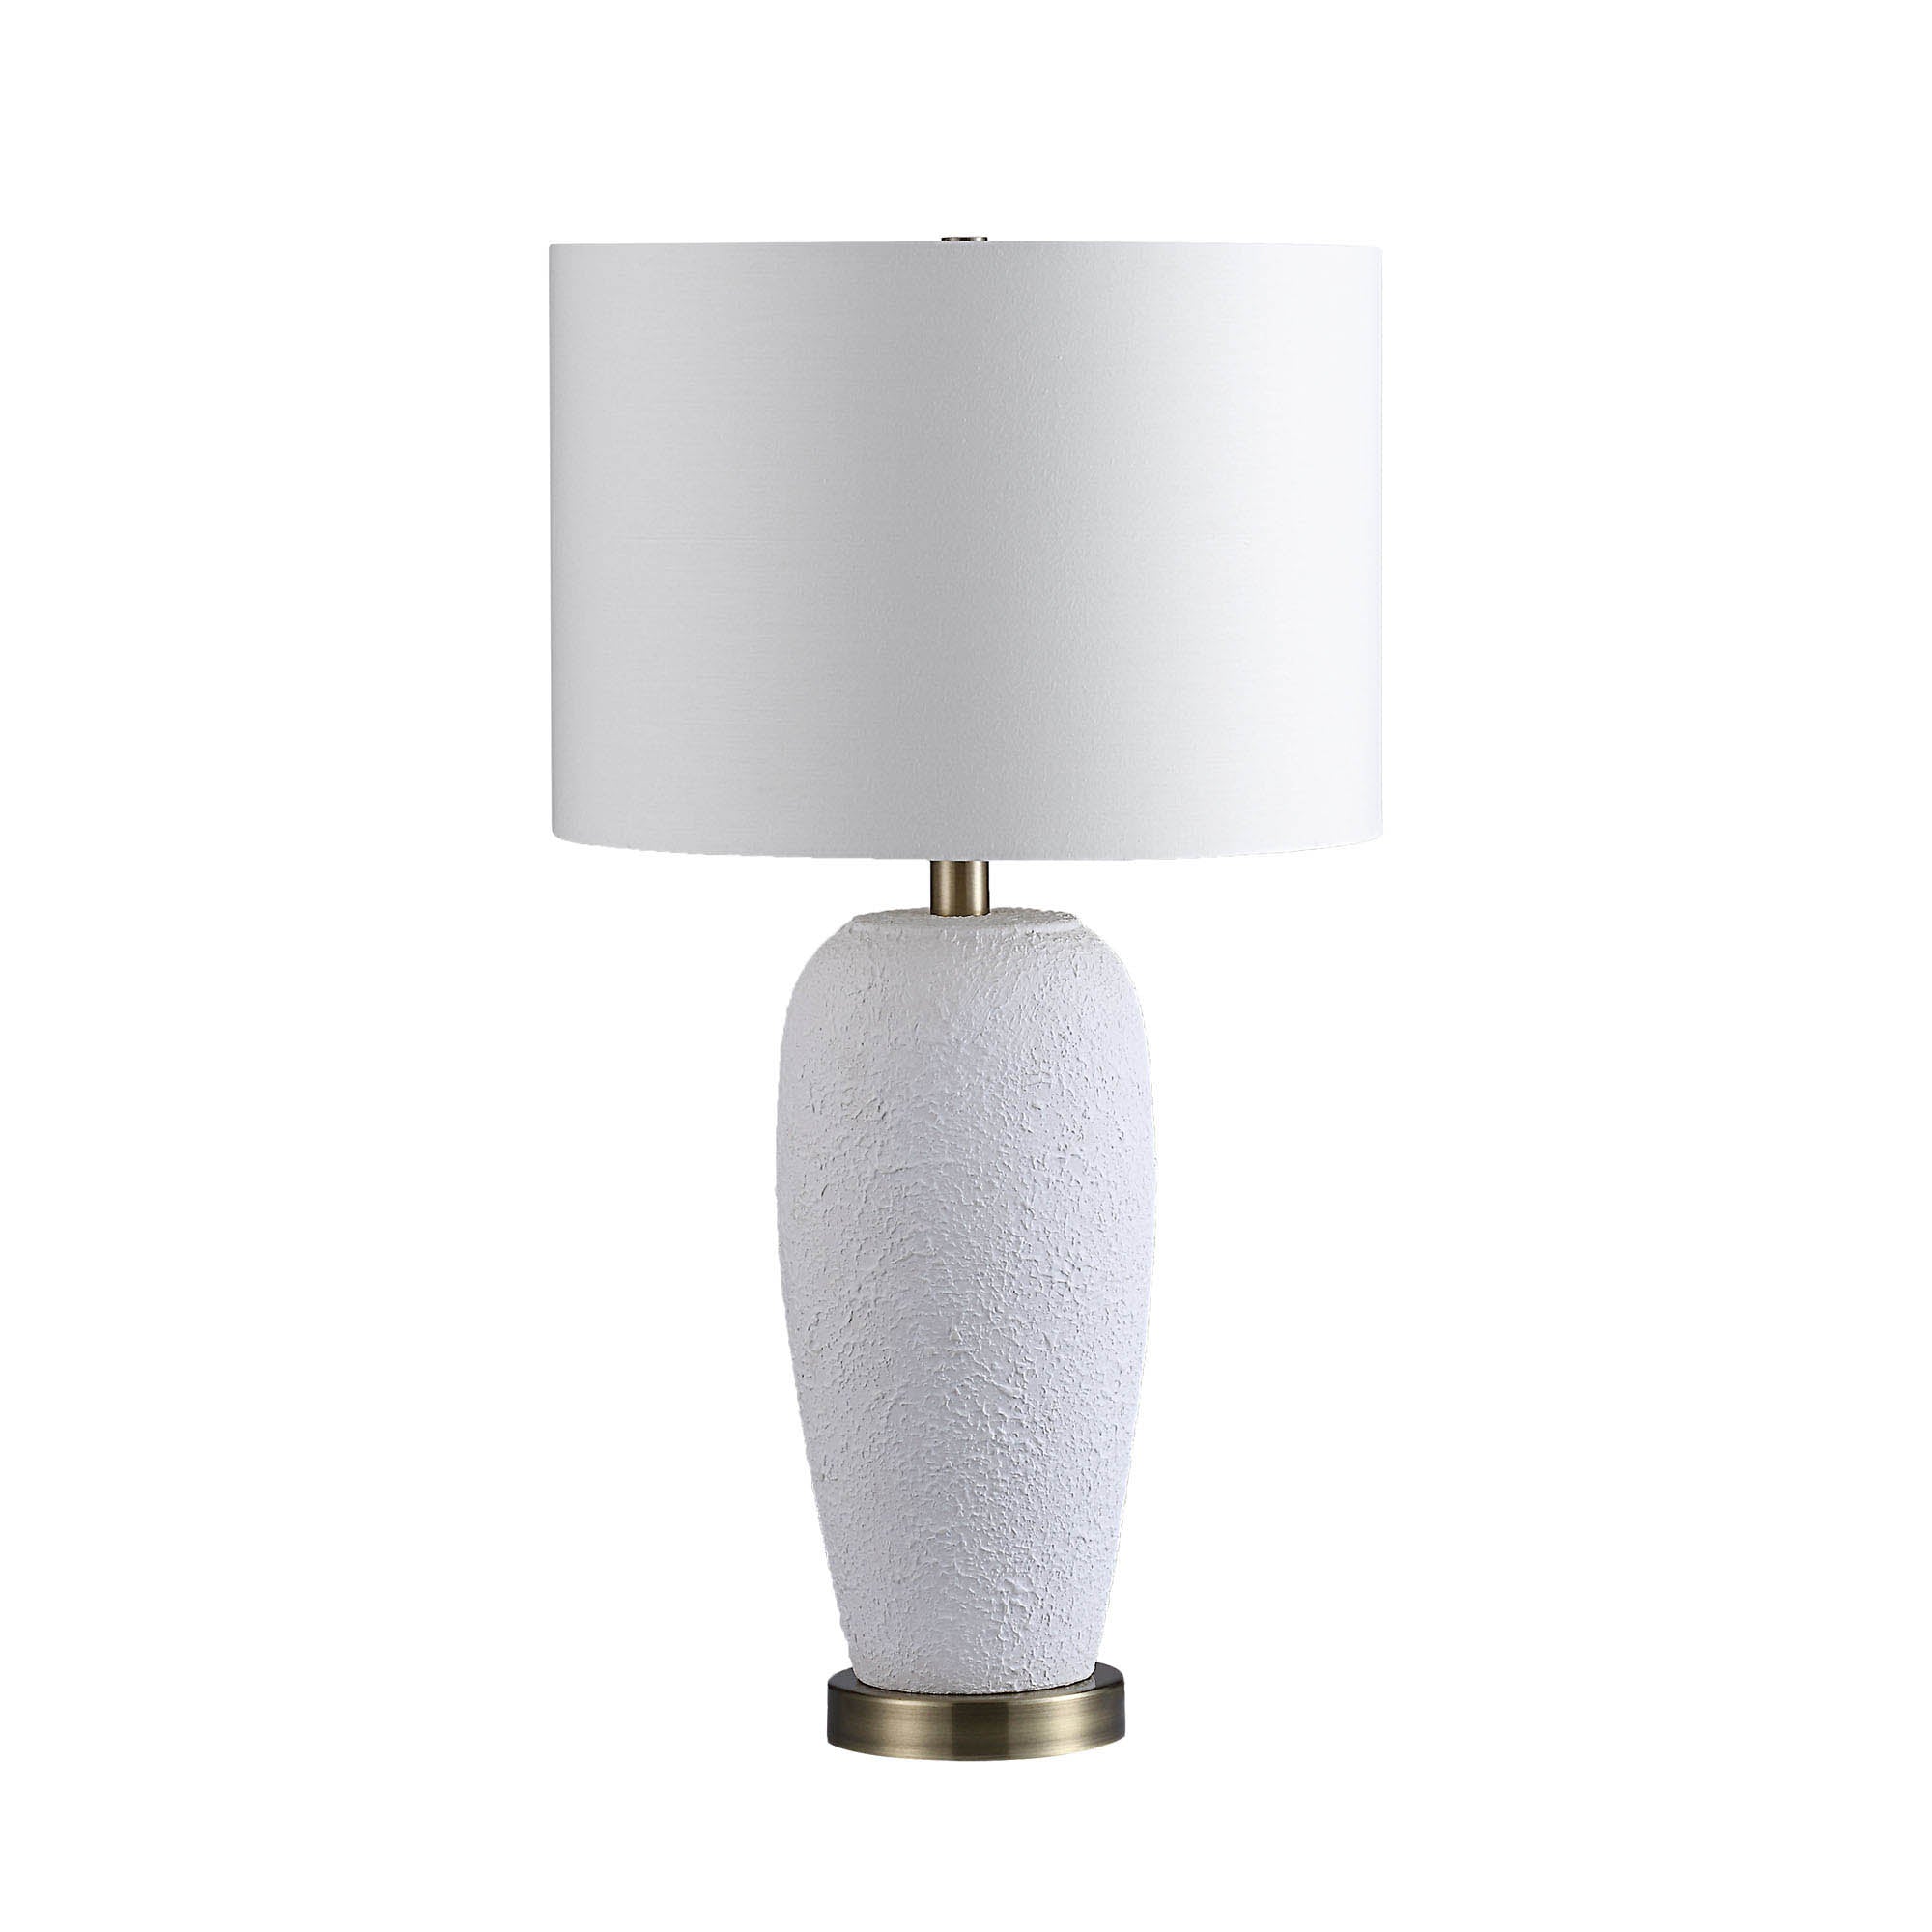 Renwil - NISSA Table Lamp - LPT1243 - White